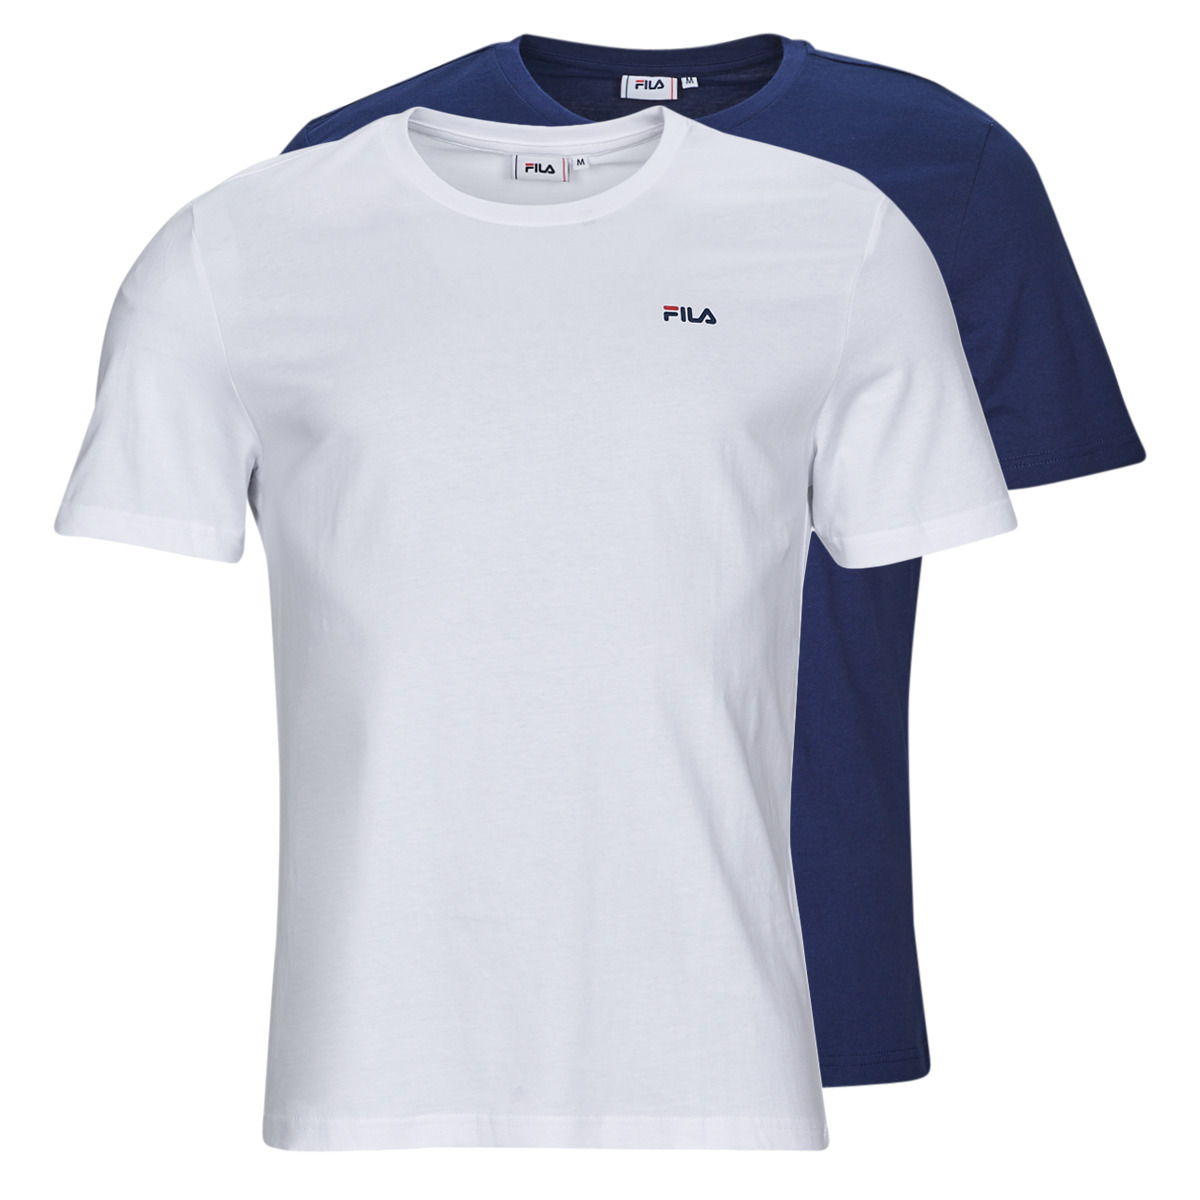 Textil Muži Trička s krátkým rukávem Fila BROD TEE PACK X2 Tmavě modrá / Bílá